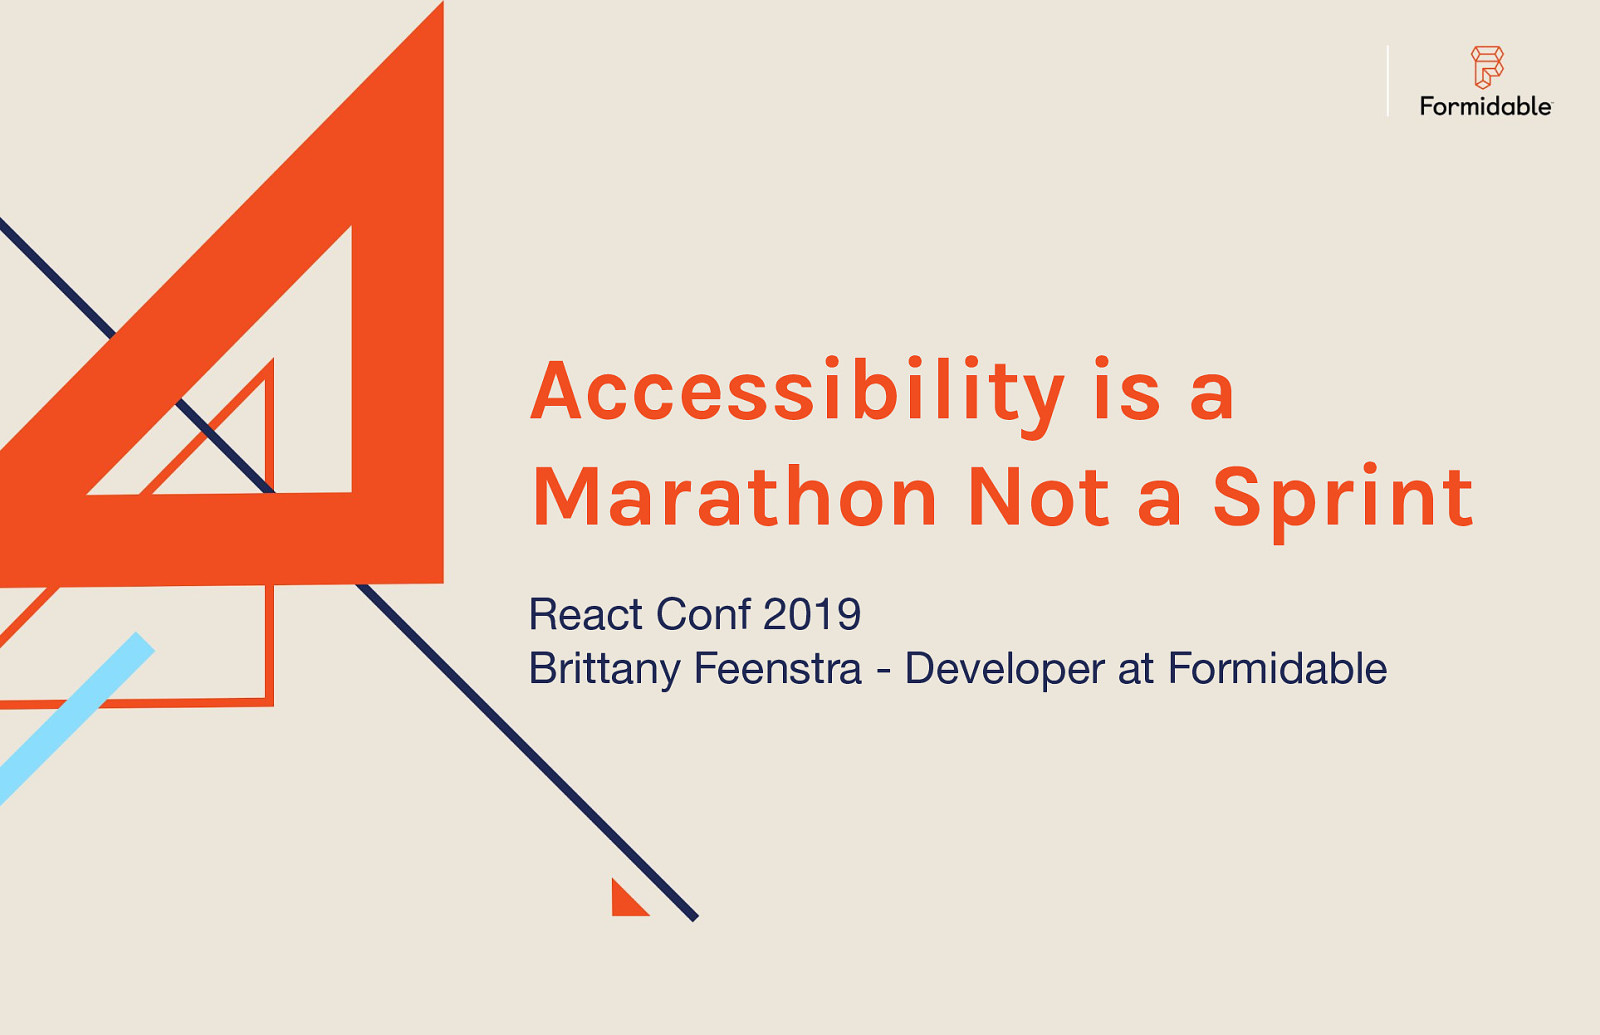 Accessibility is a marathon, not a sprint